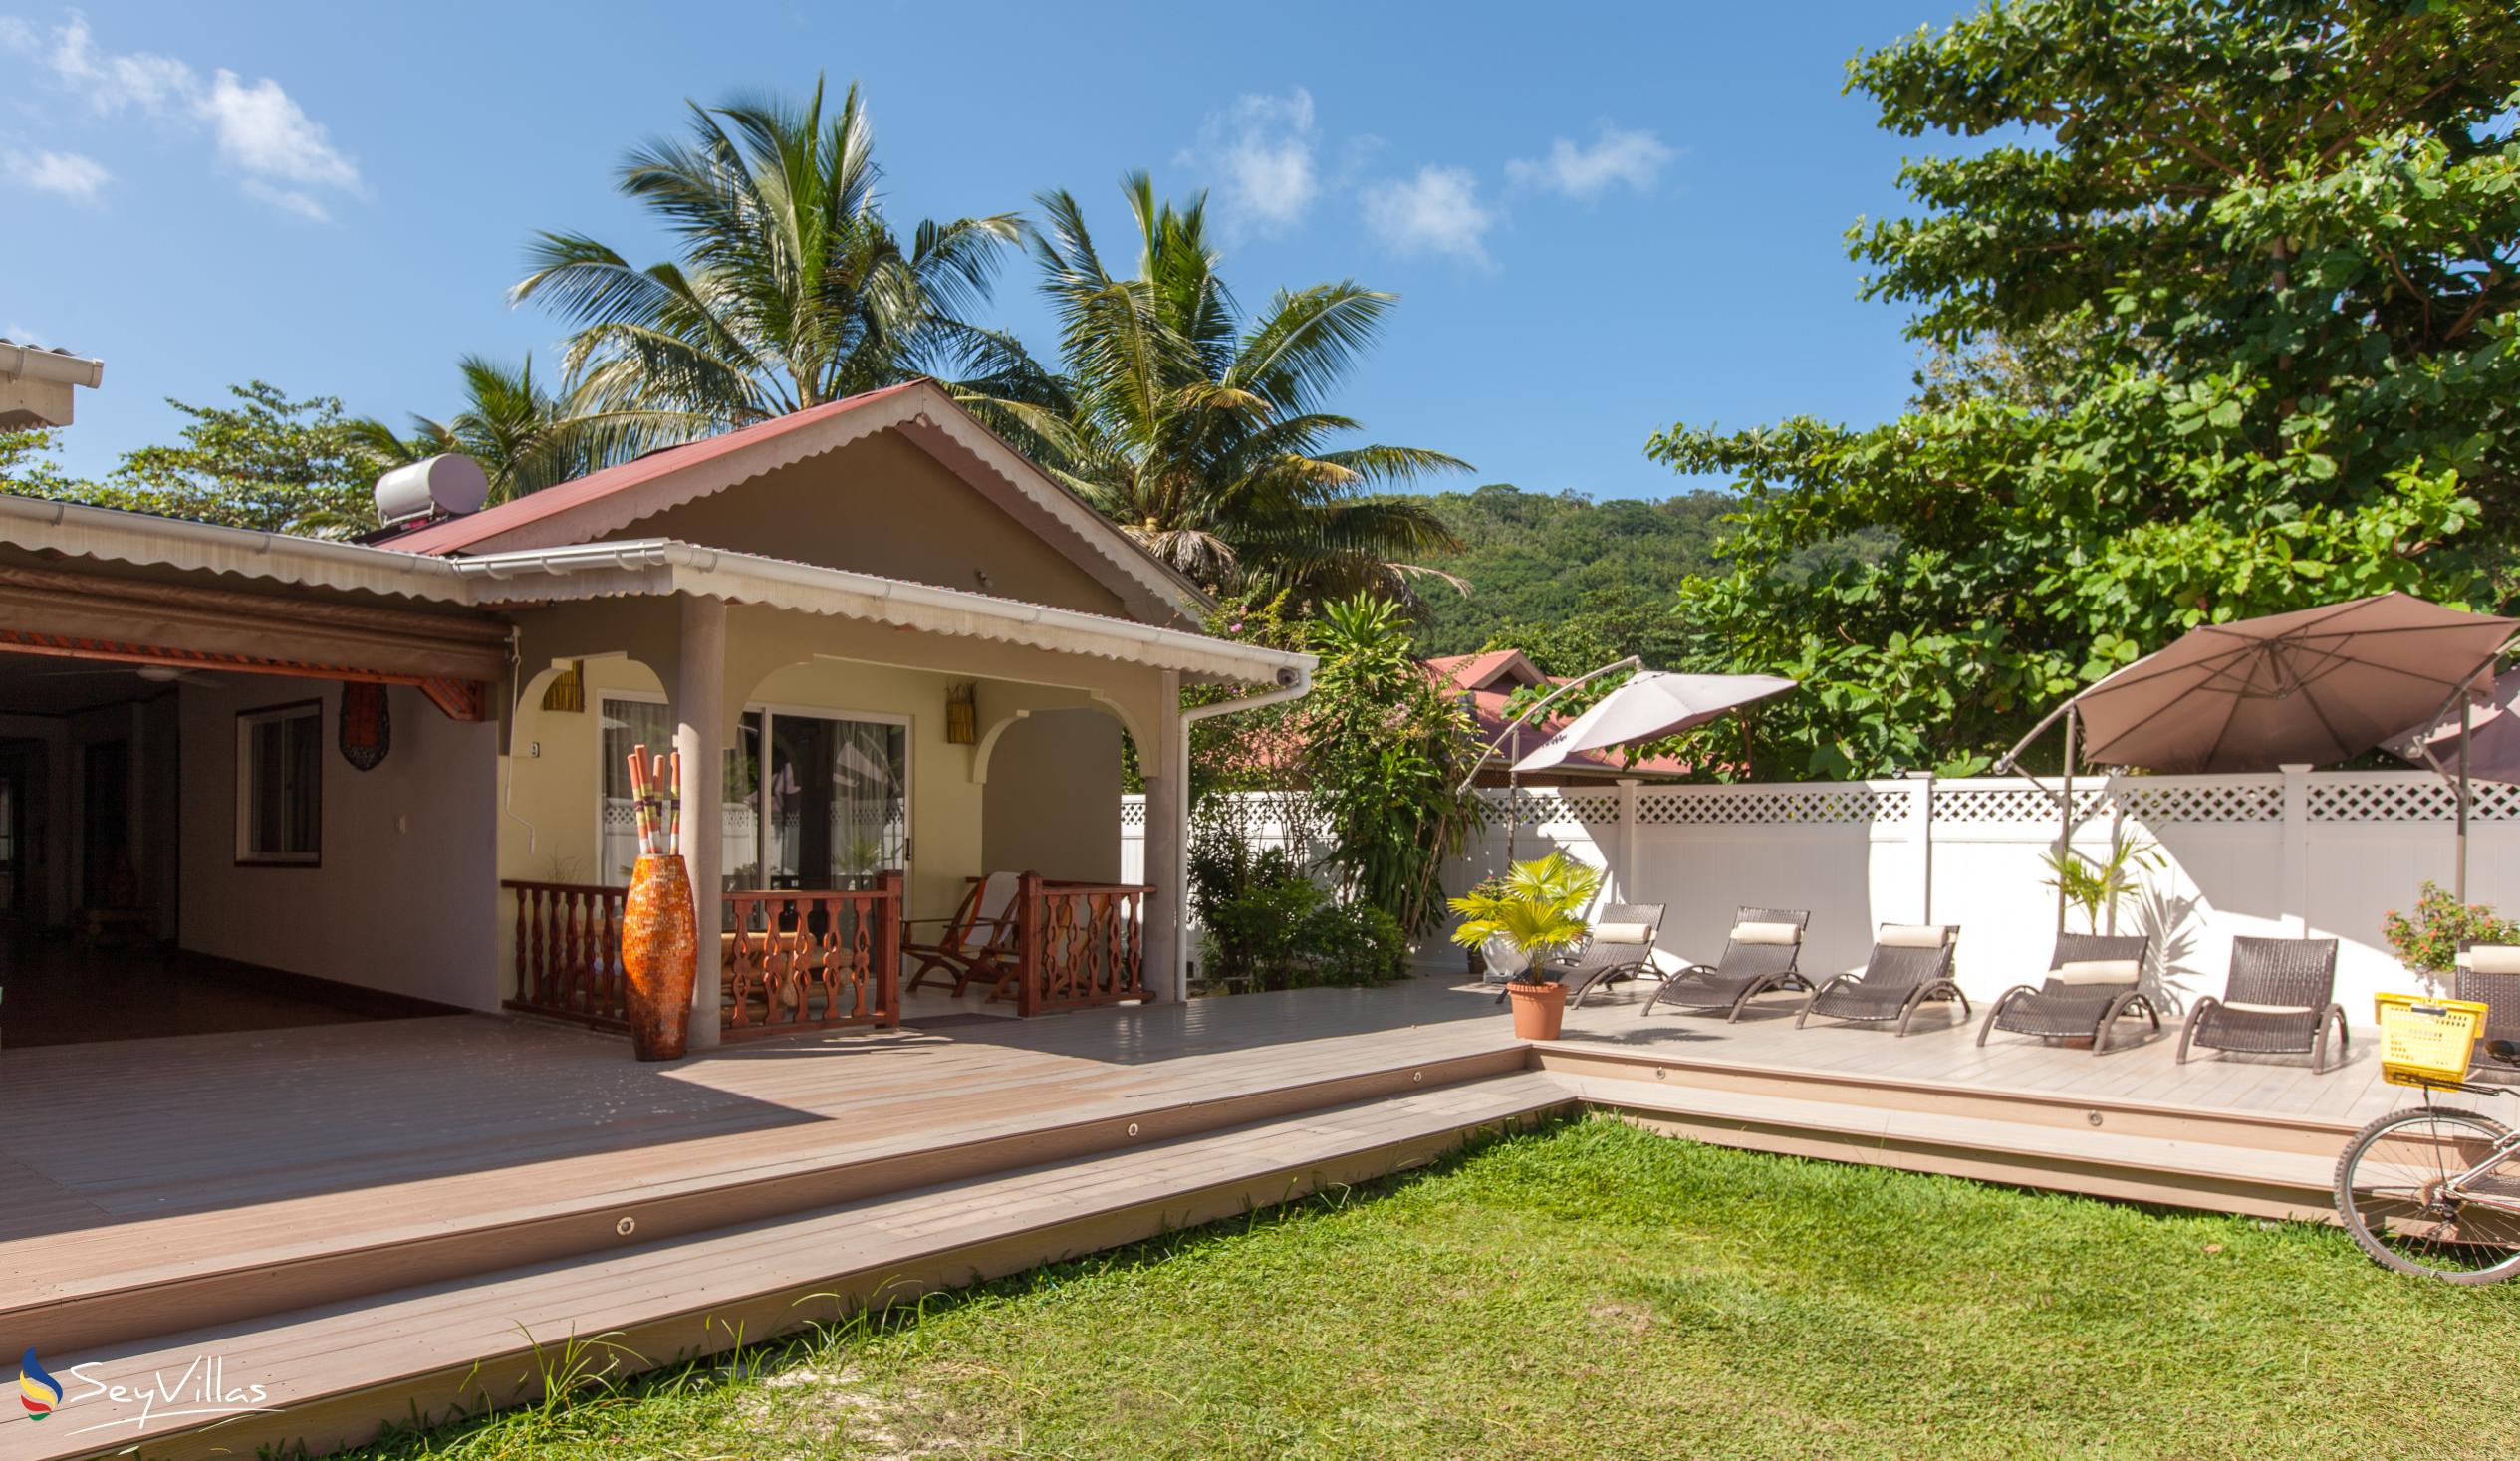 Foto 6: Villa Authentique - Esterno - La Digue (Seychelles)